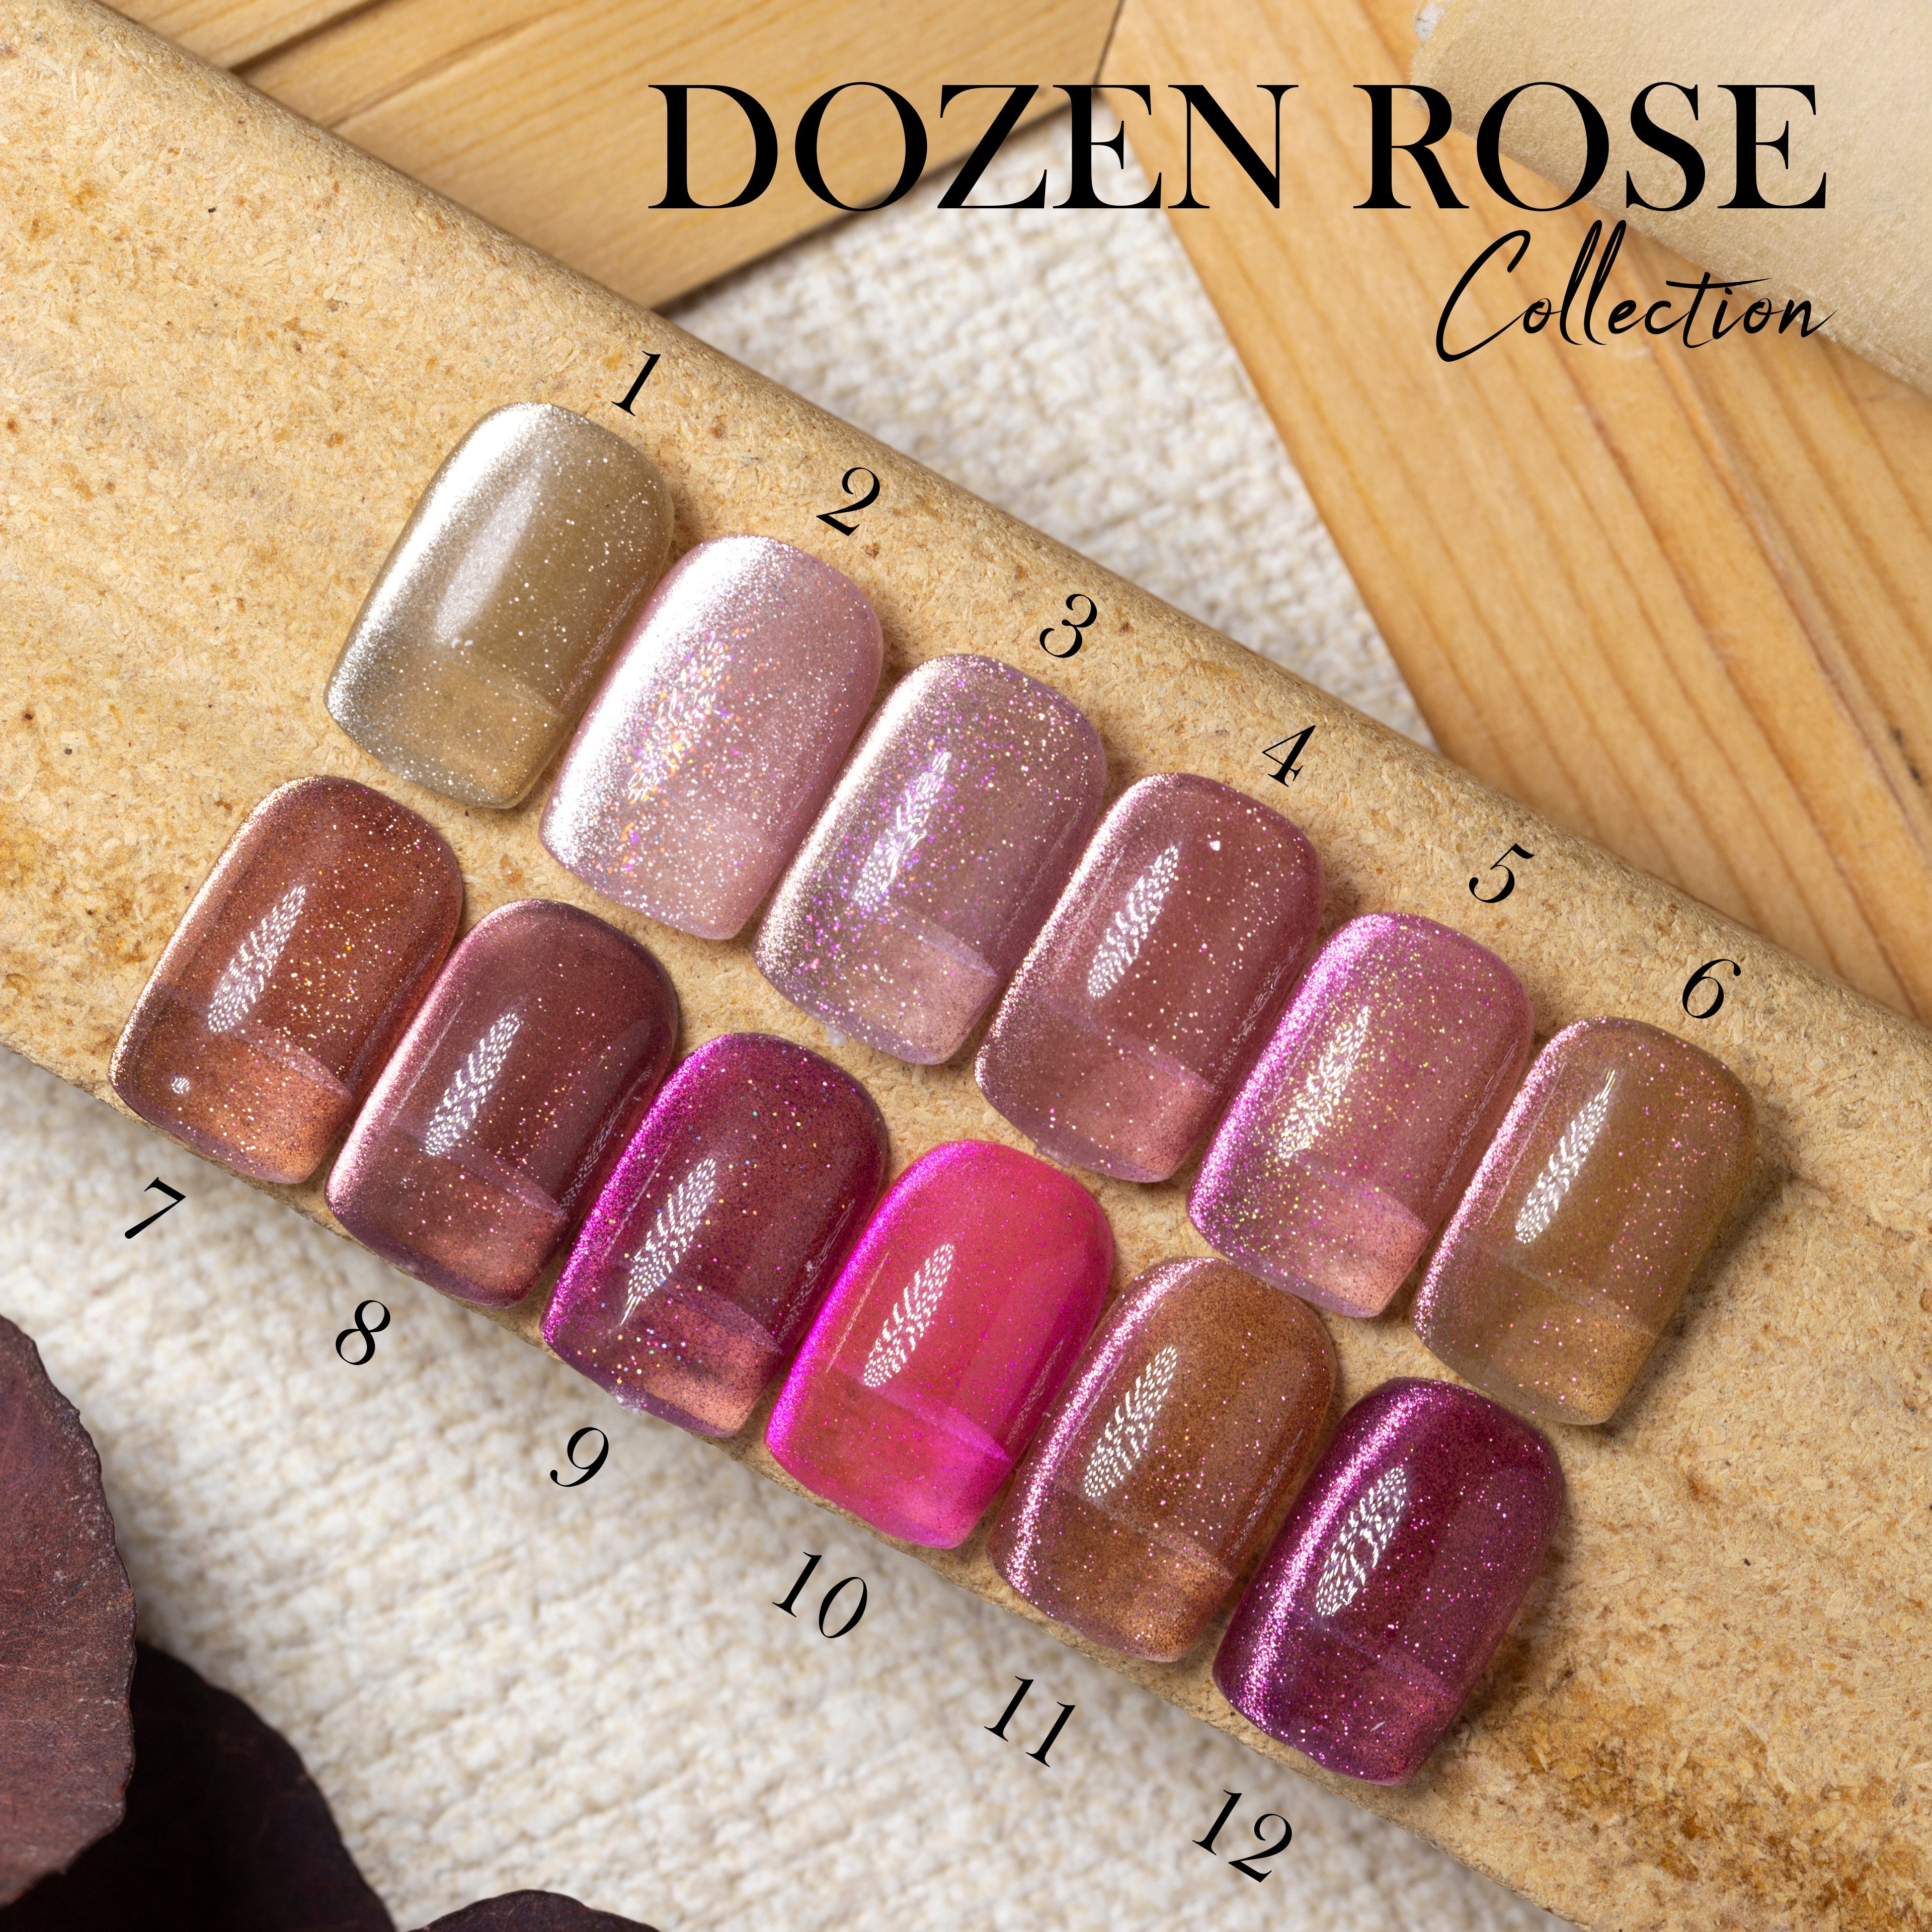 LDS DR06 - Gel Polish 0.5 oz - Dozen Rose Collection